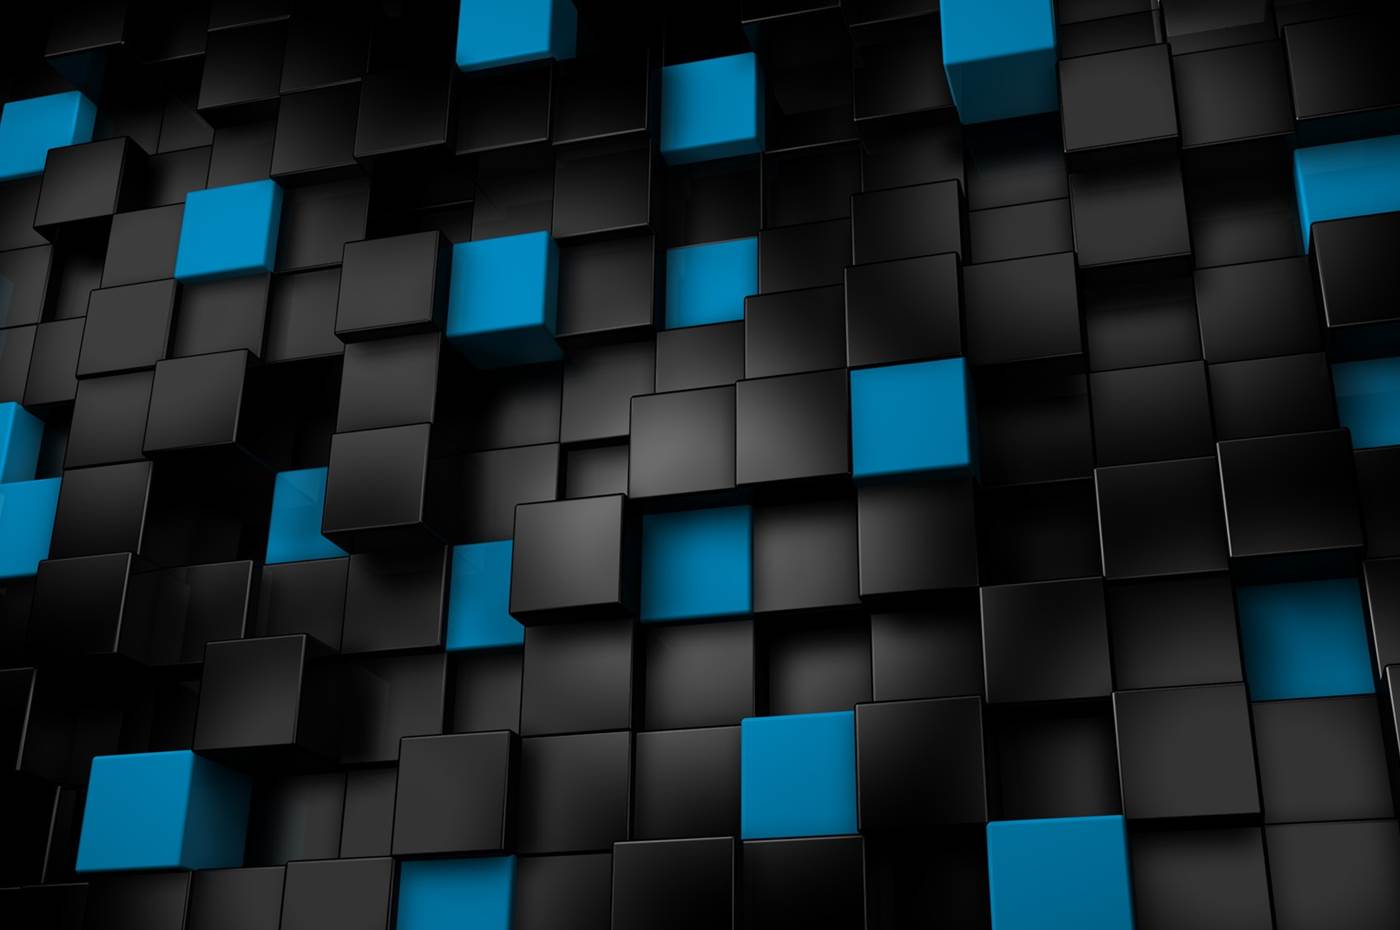 Gambar Wallpaper Keren 3d Bergerak Kampung Wallpaper Blue And Black Blocks 1400x930 Wallpaper Teahub Io